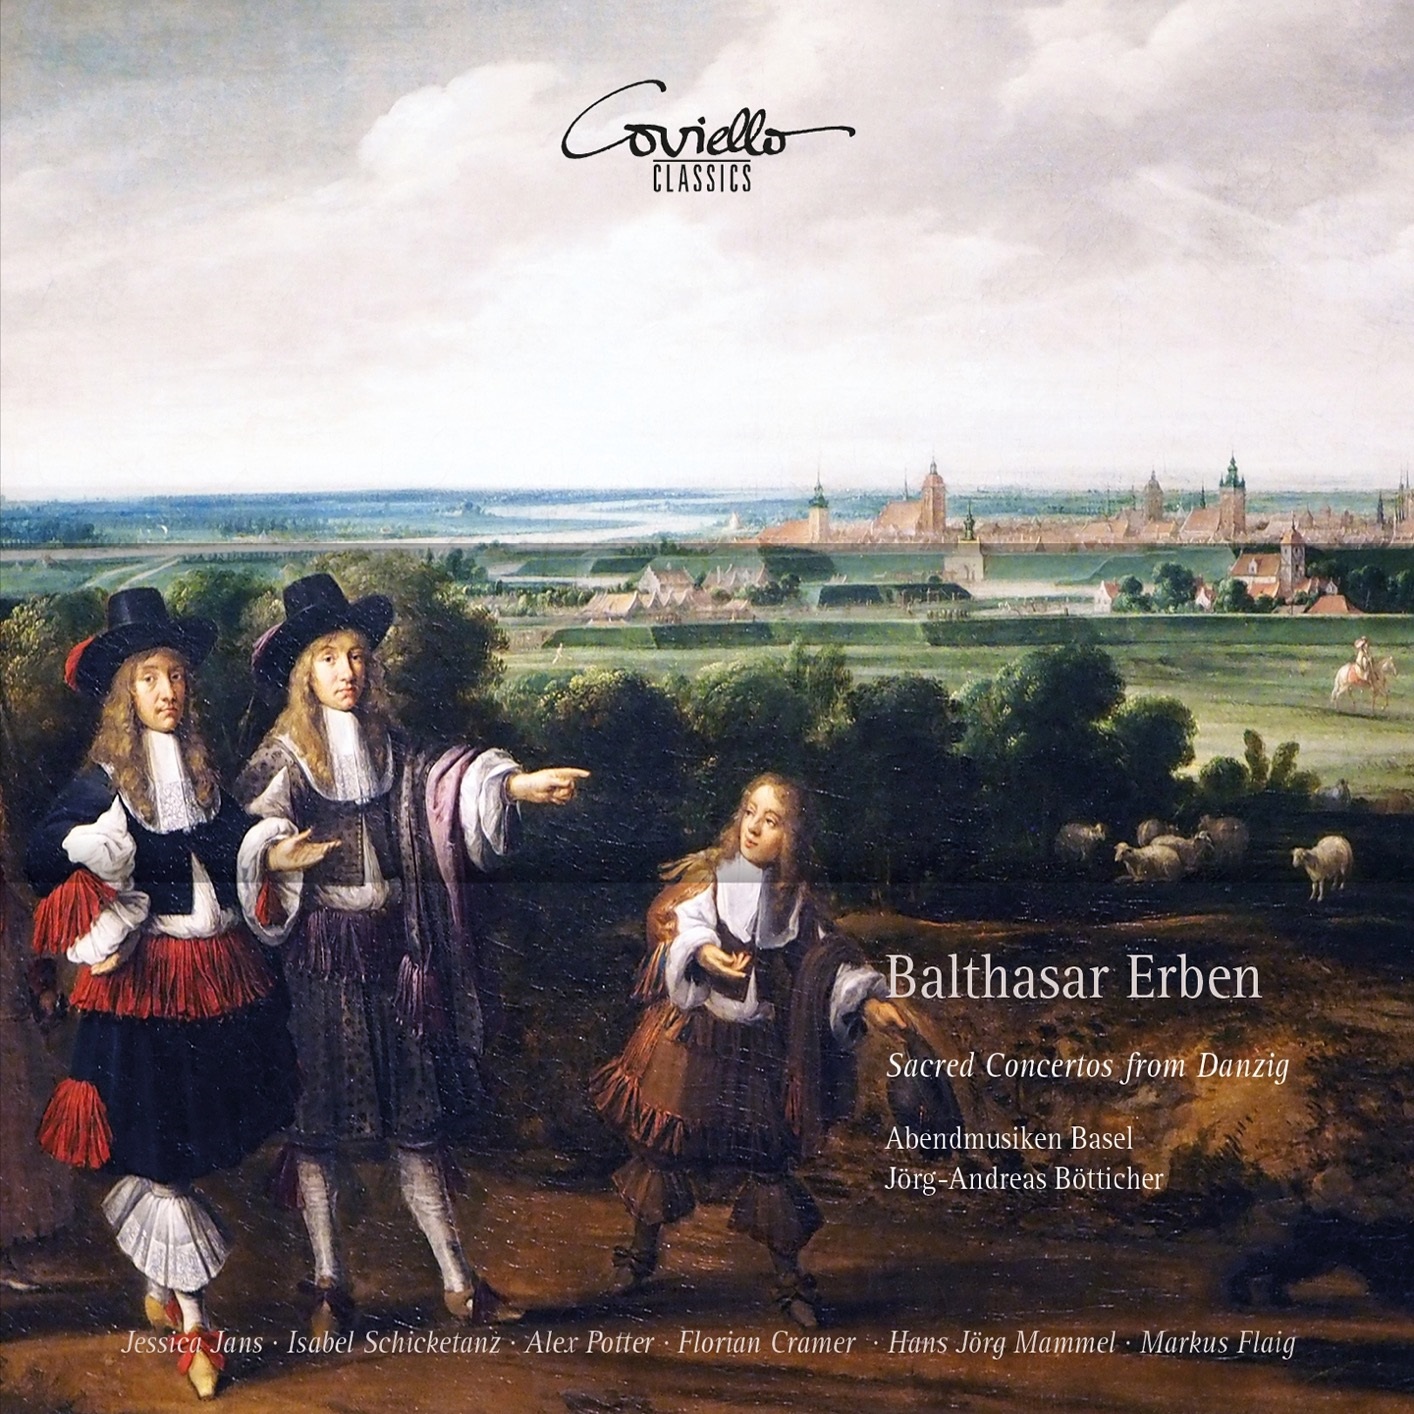 Abendmusiken Basel & Jorg-Andreas Botticher – Balthasar Erben: Sacred Concertos from Danzig (2021) [FLAC 24bit/96kHz]